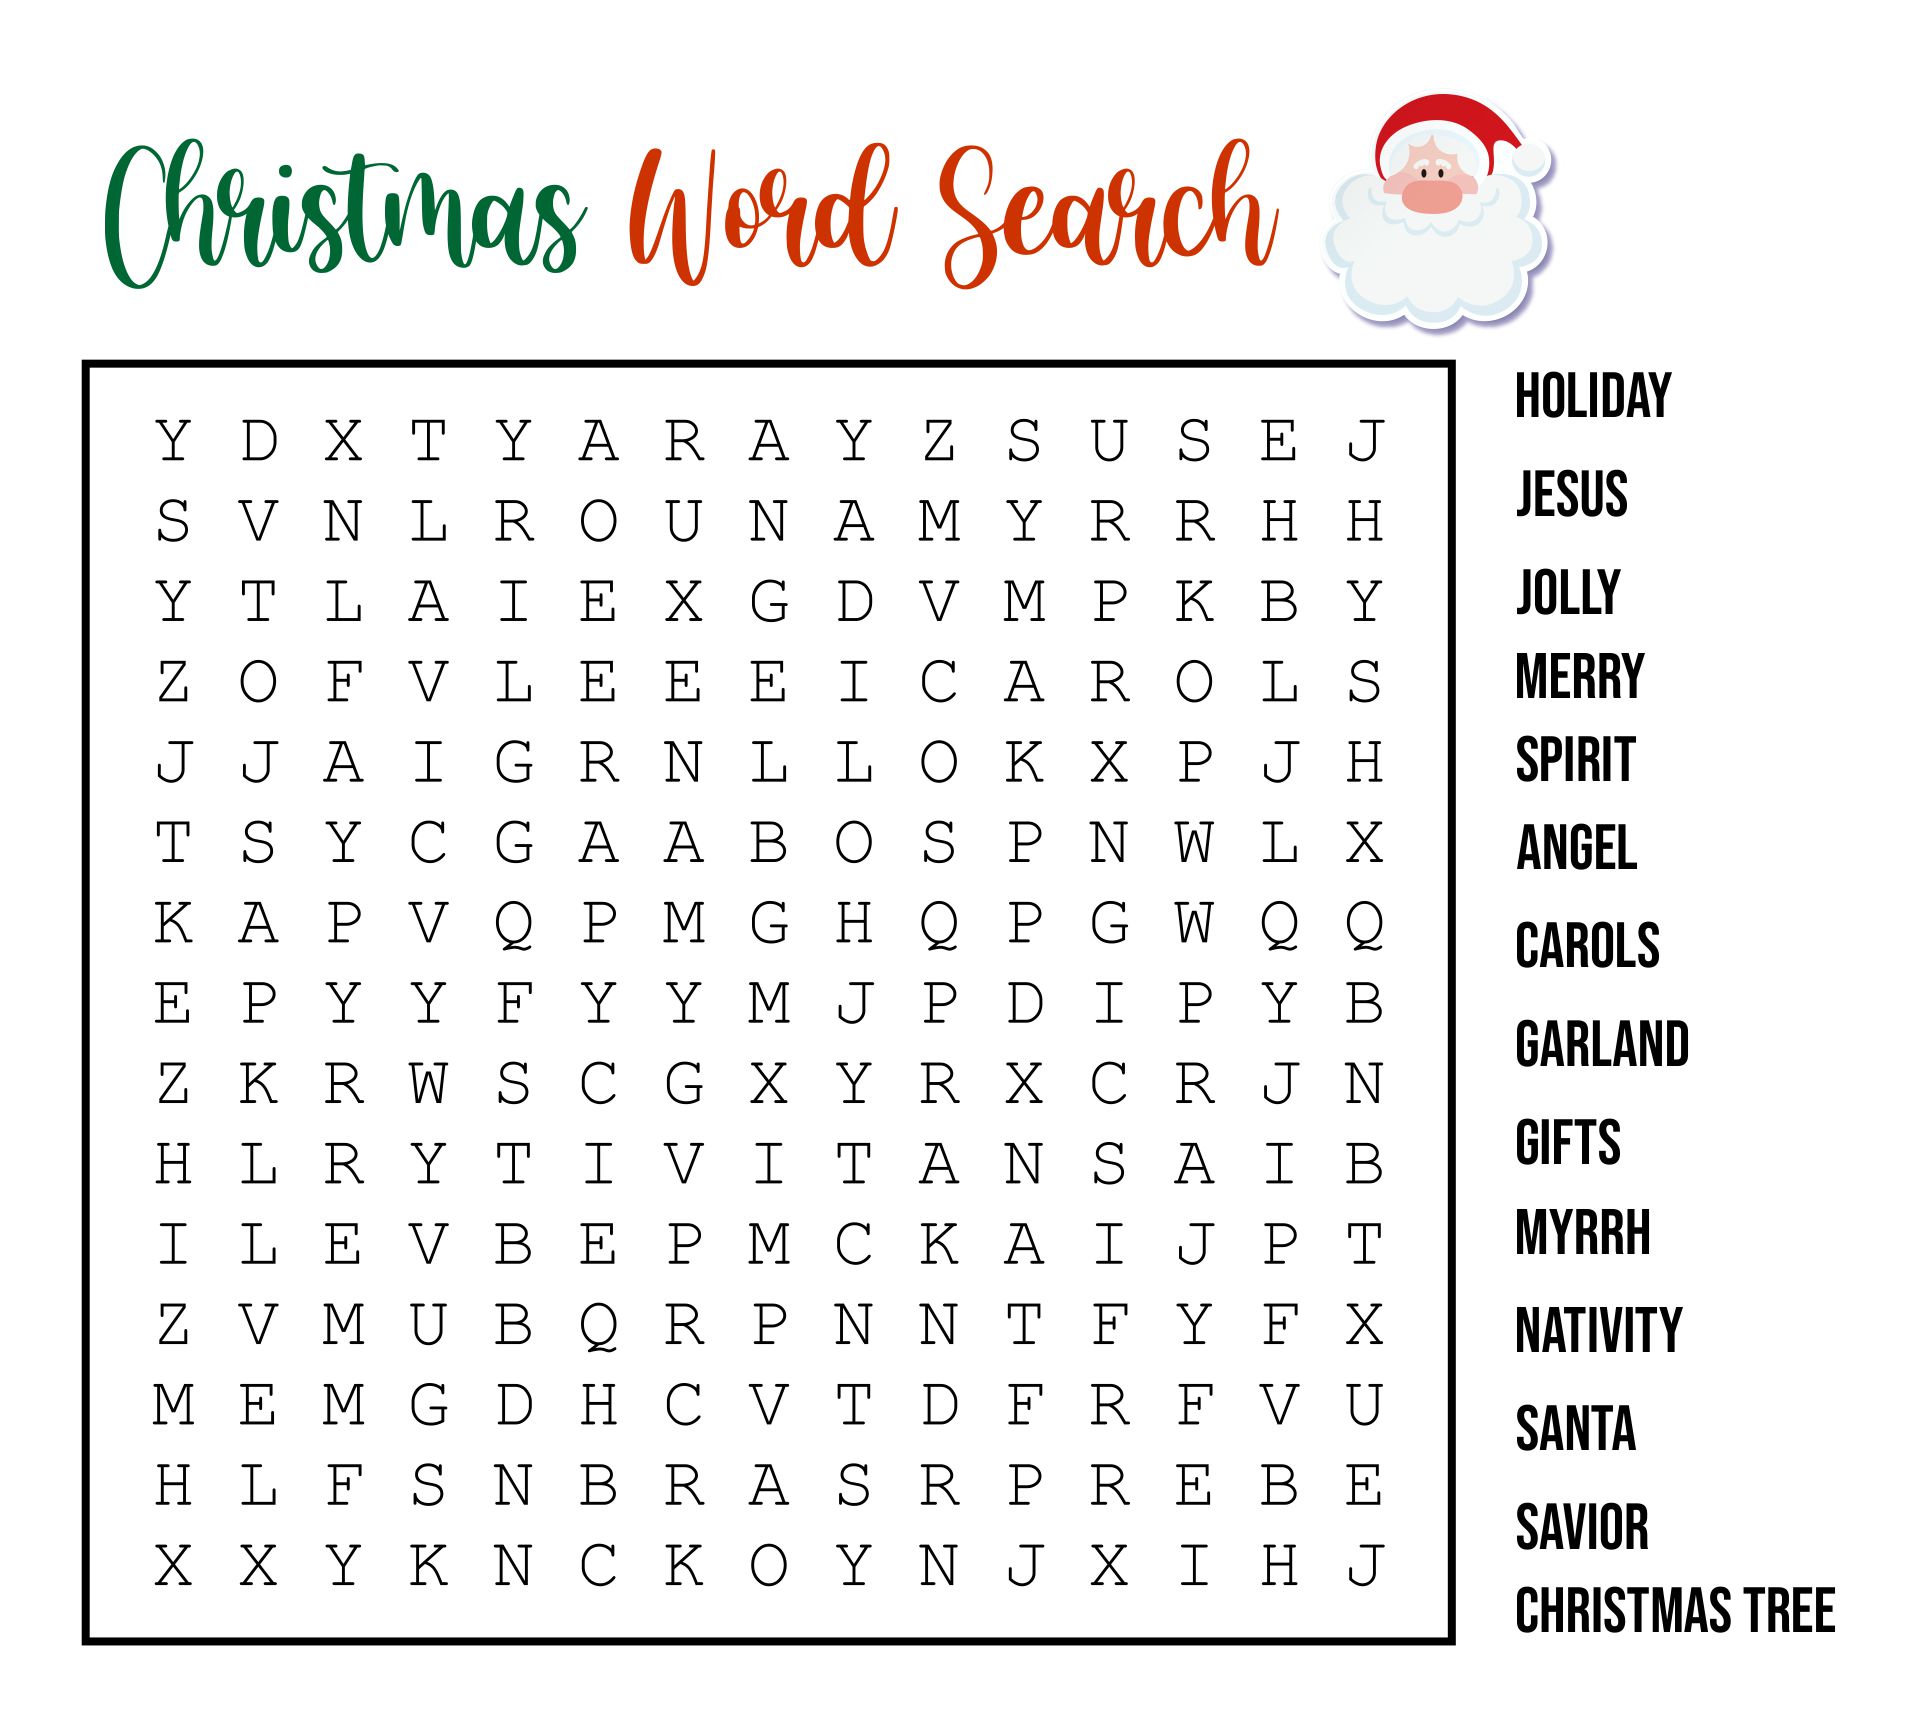 Christmas Carols Word Search Puzzle Printable